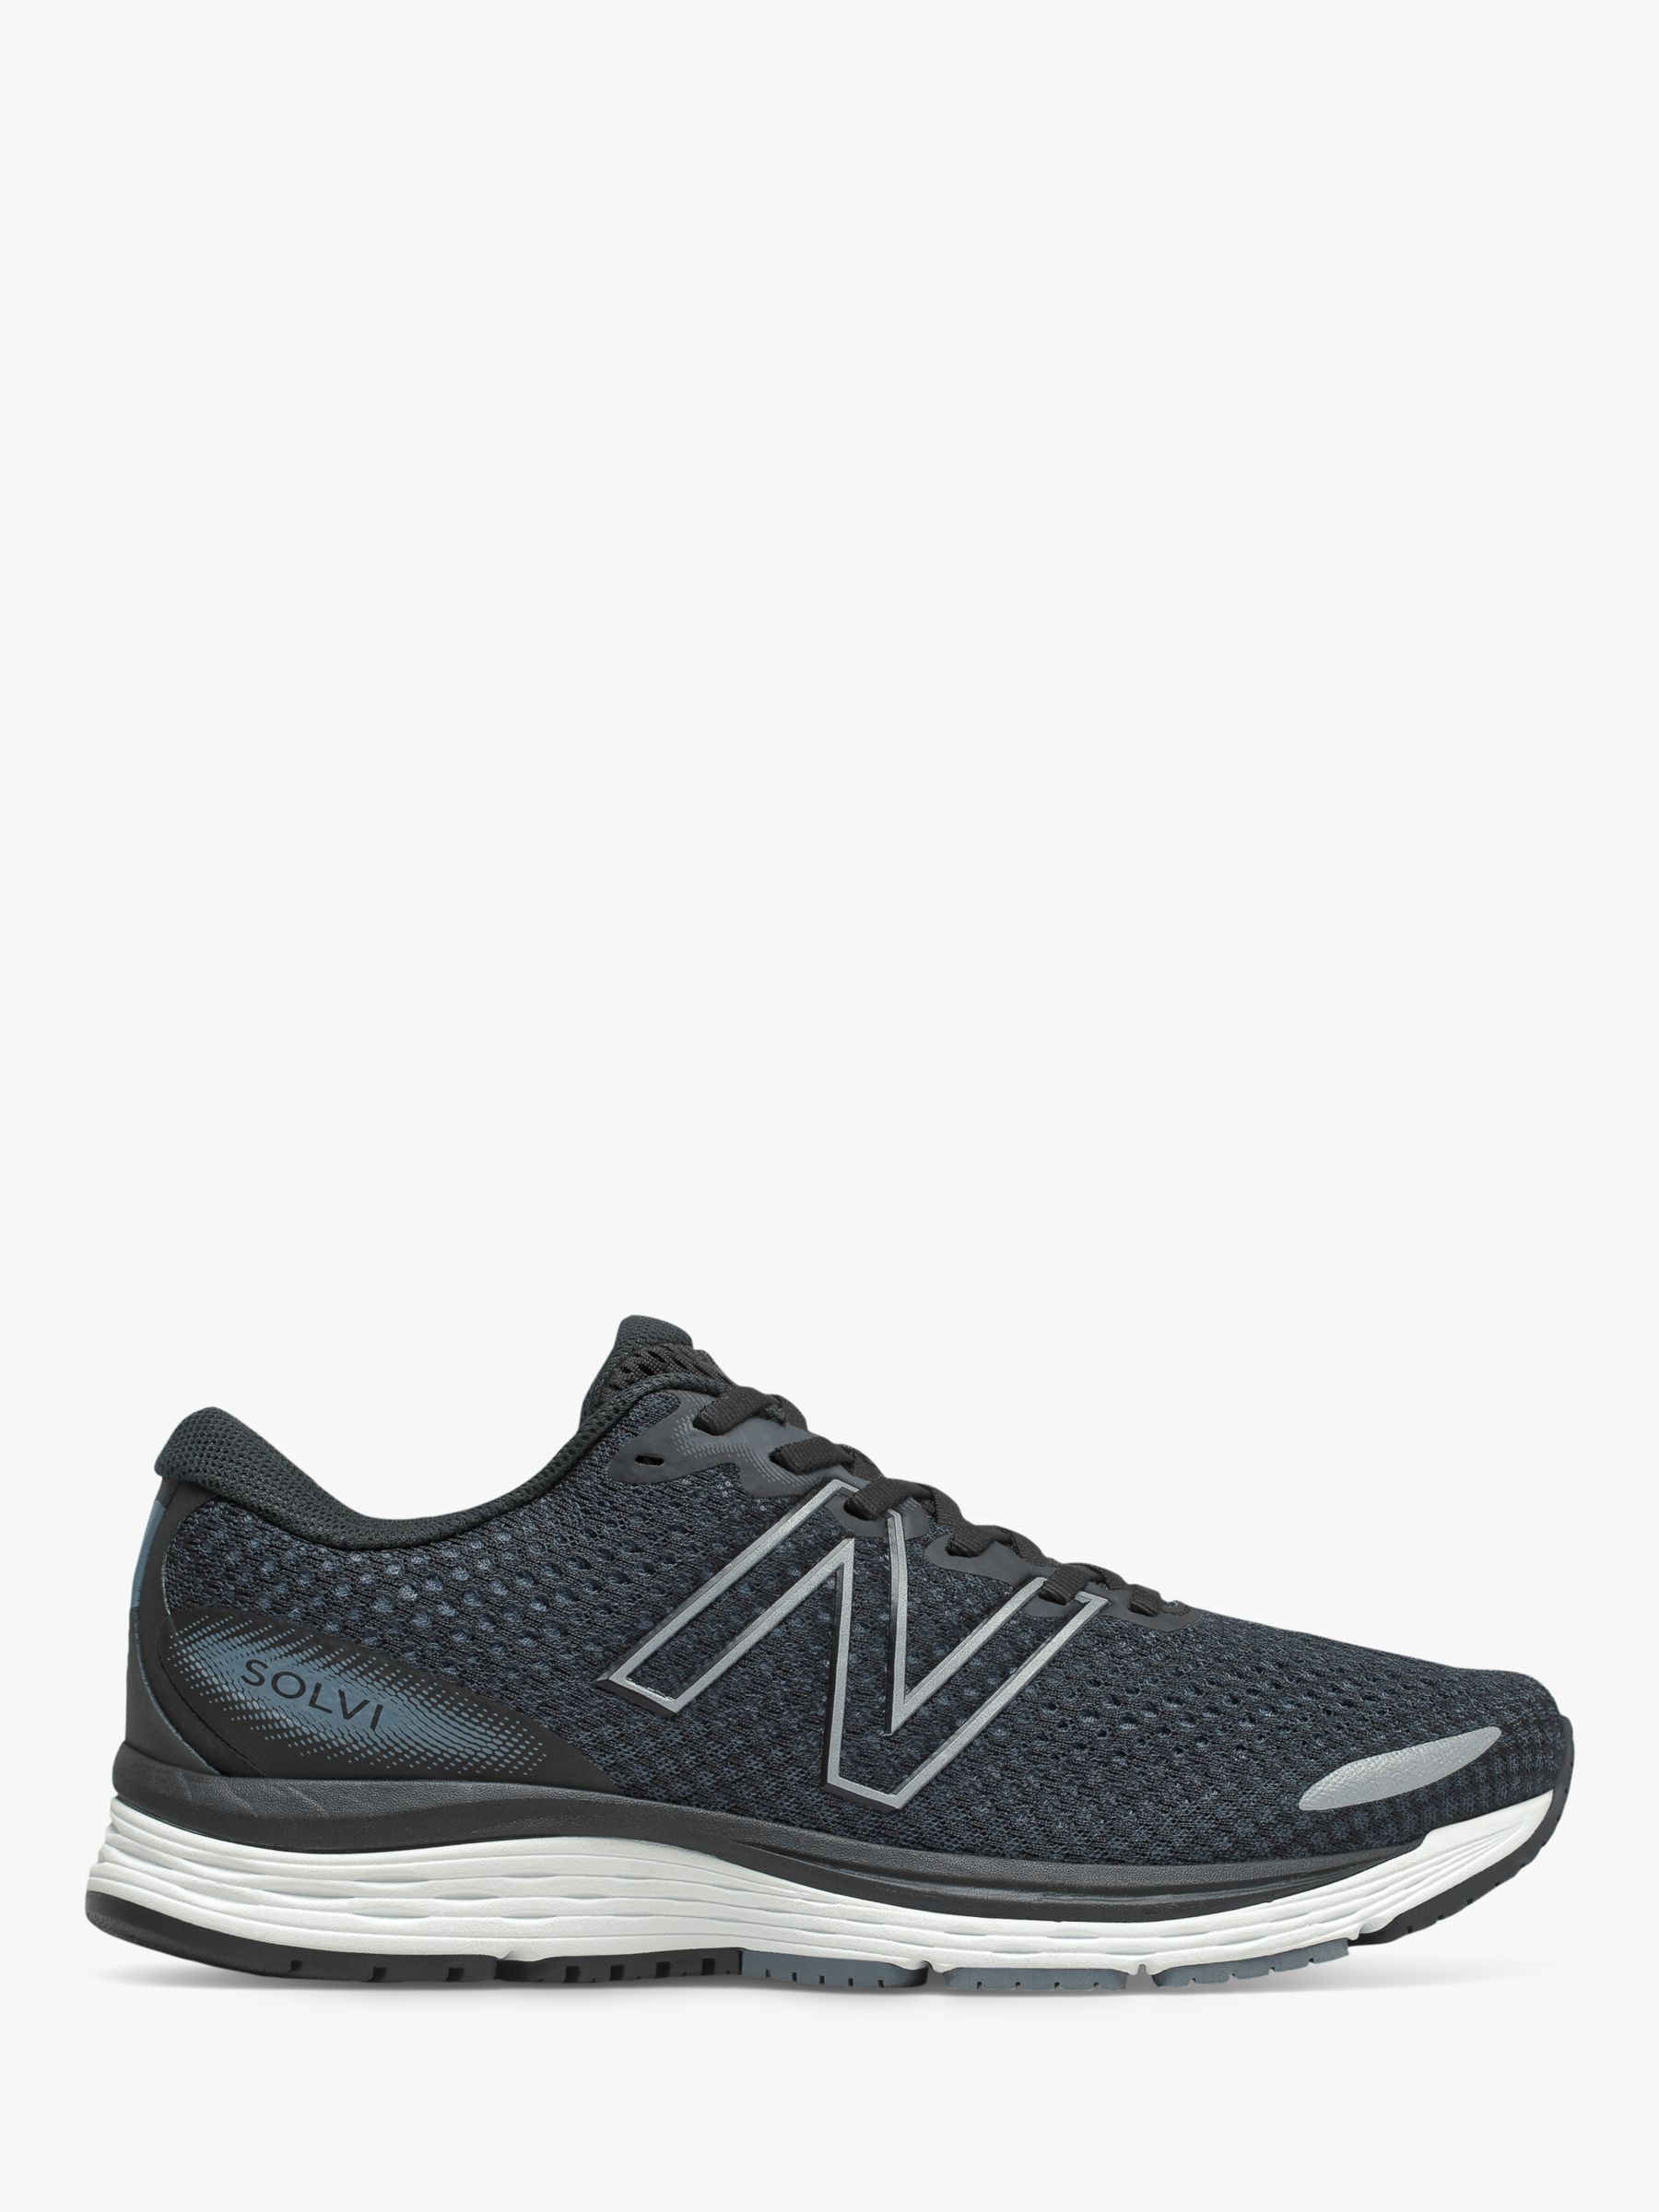 Ir a caminar impulso Efectivamente New Balance Solvi v3 Men's Running Shoes, Black/Ocean Grey, 7